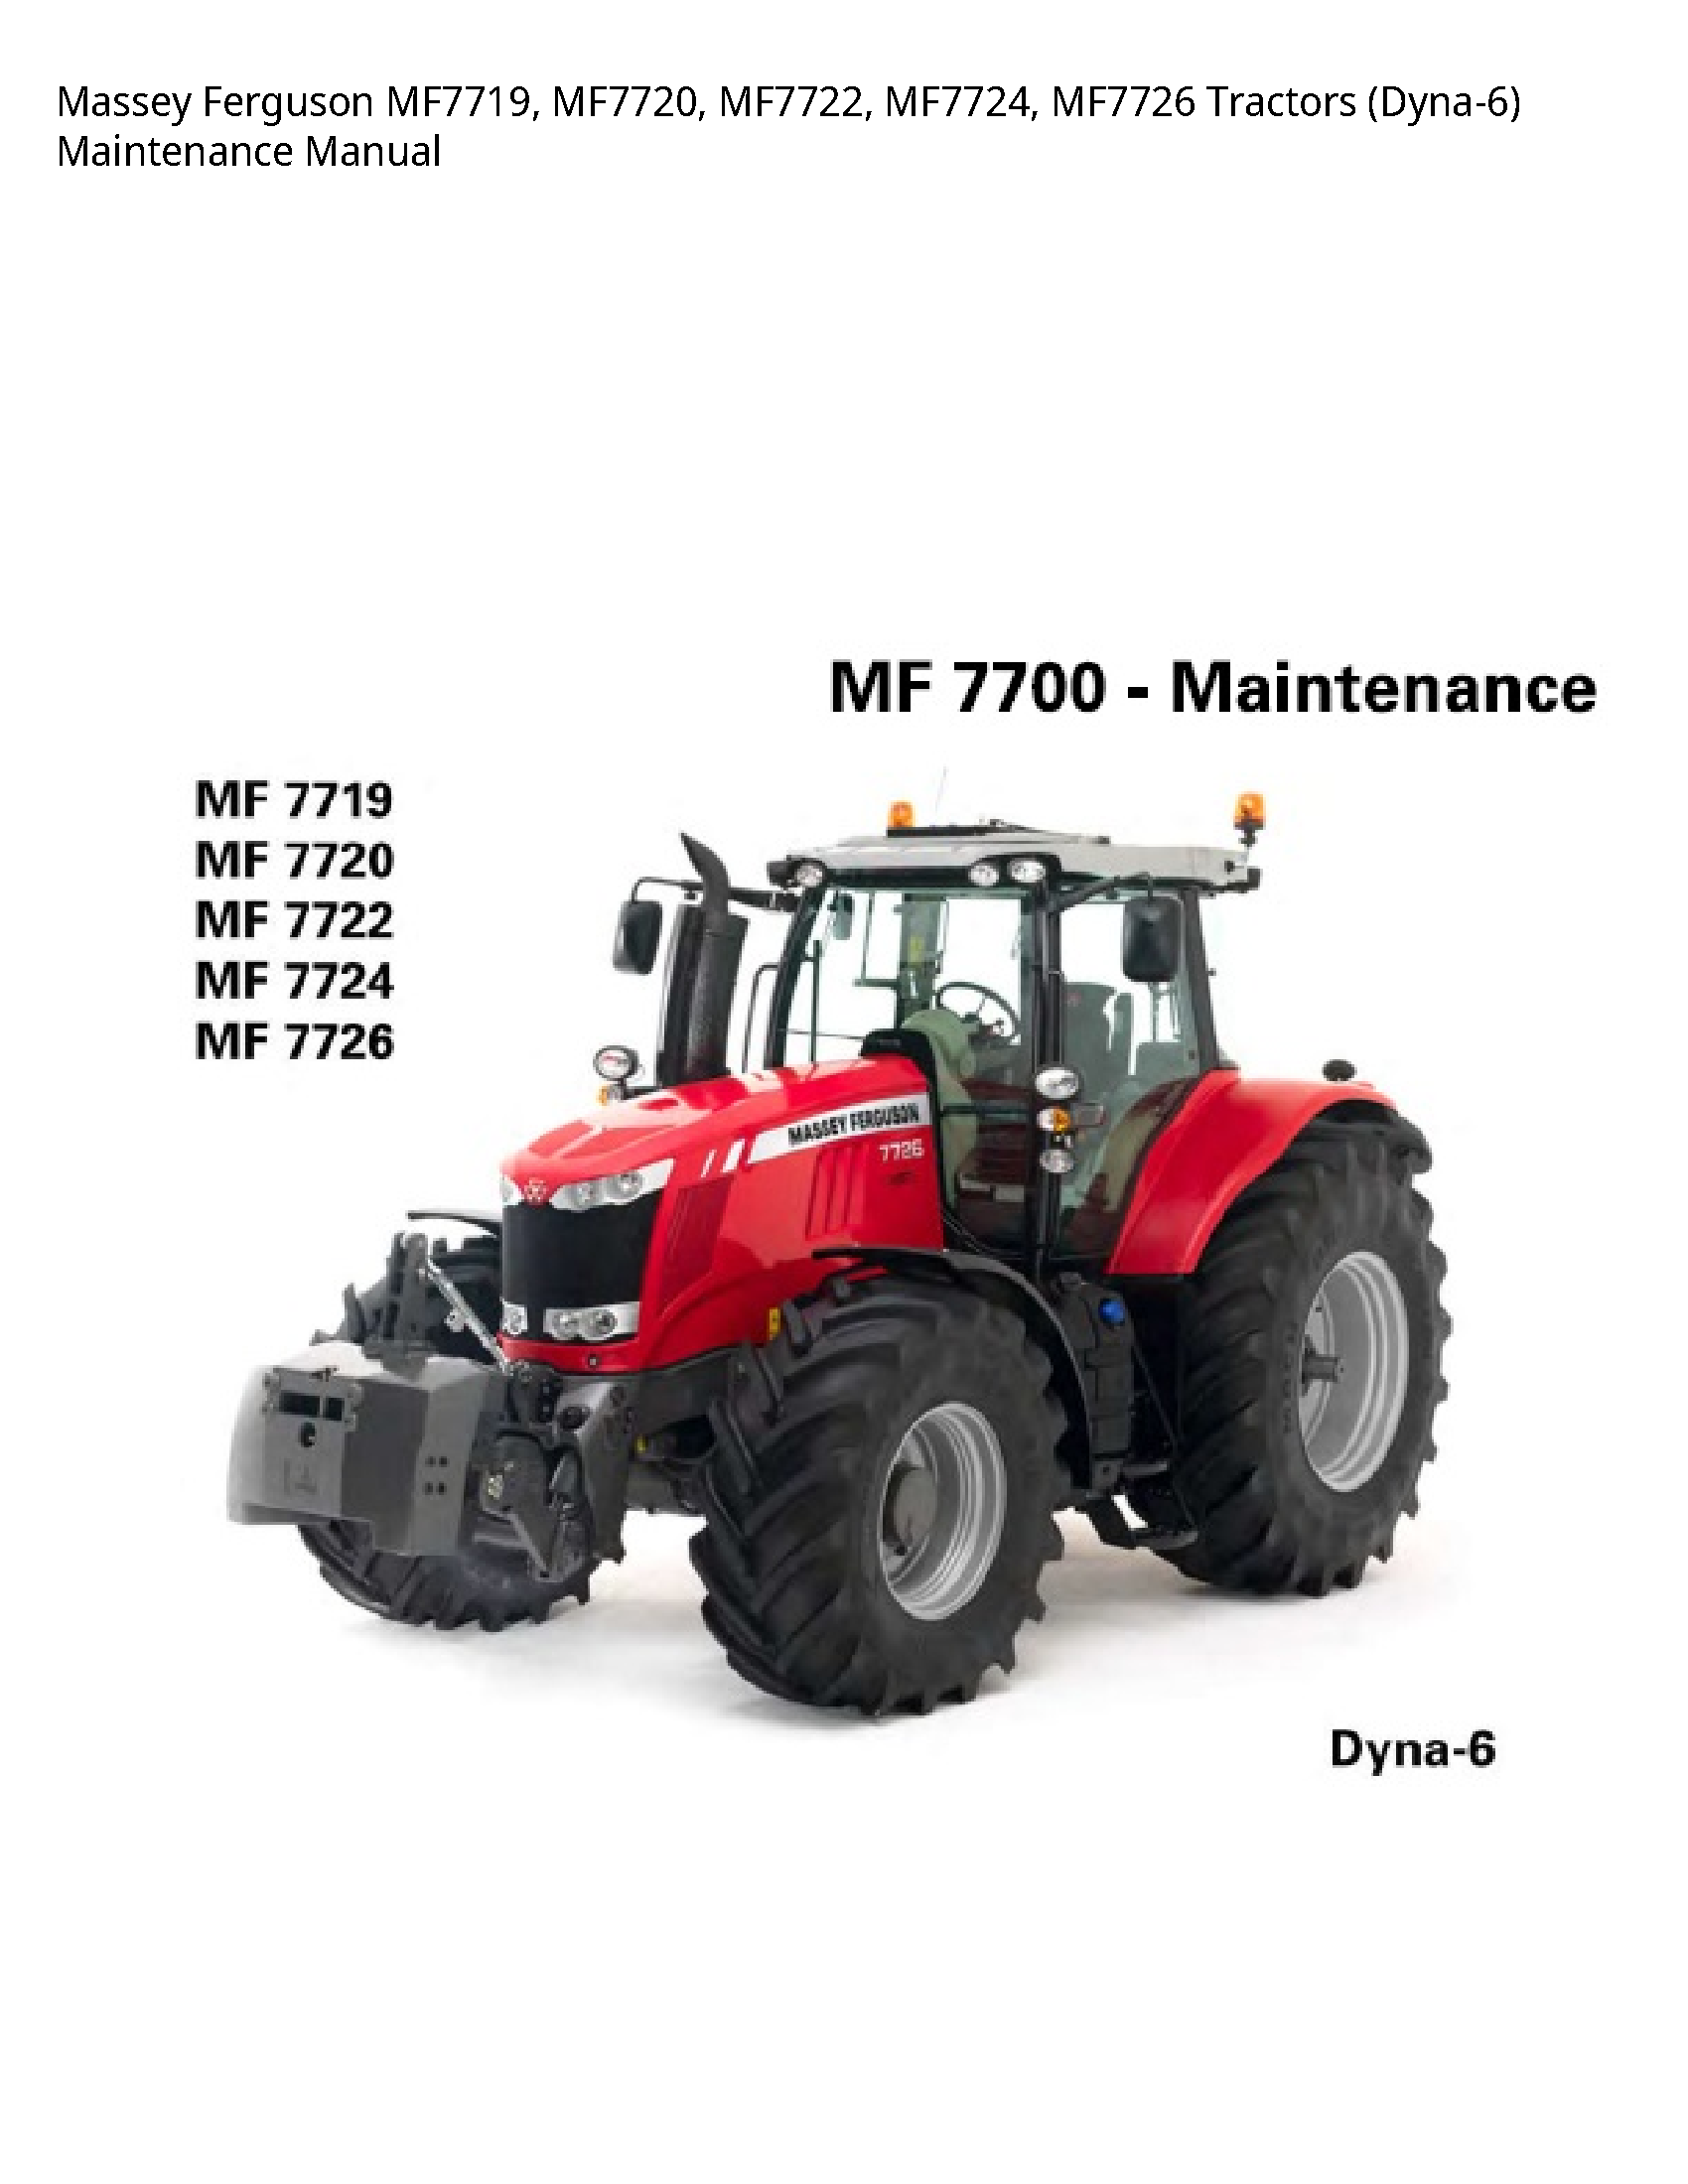 Massey Ferguson MF7719 Tractors Maintenance manual